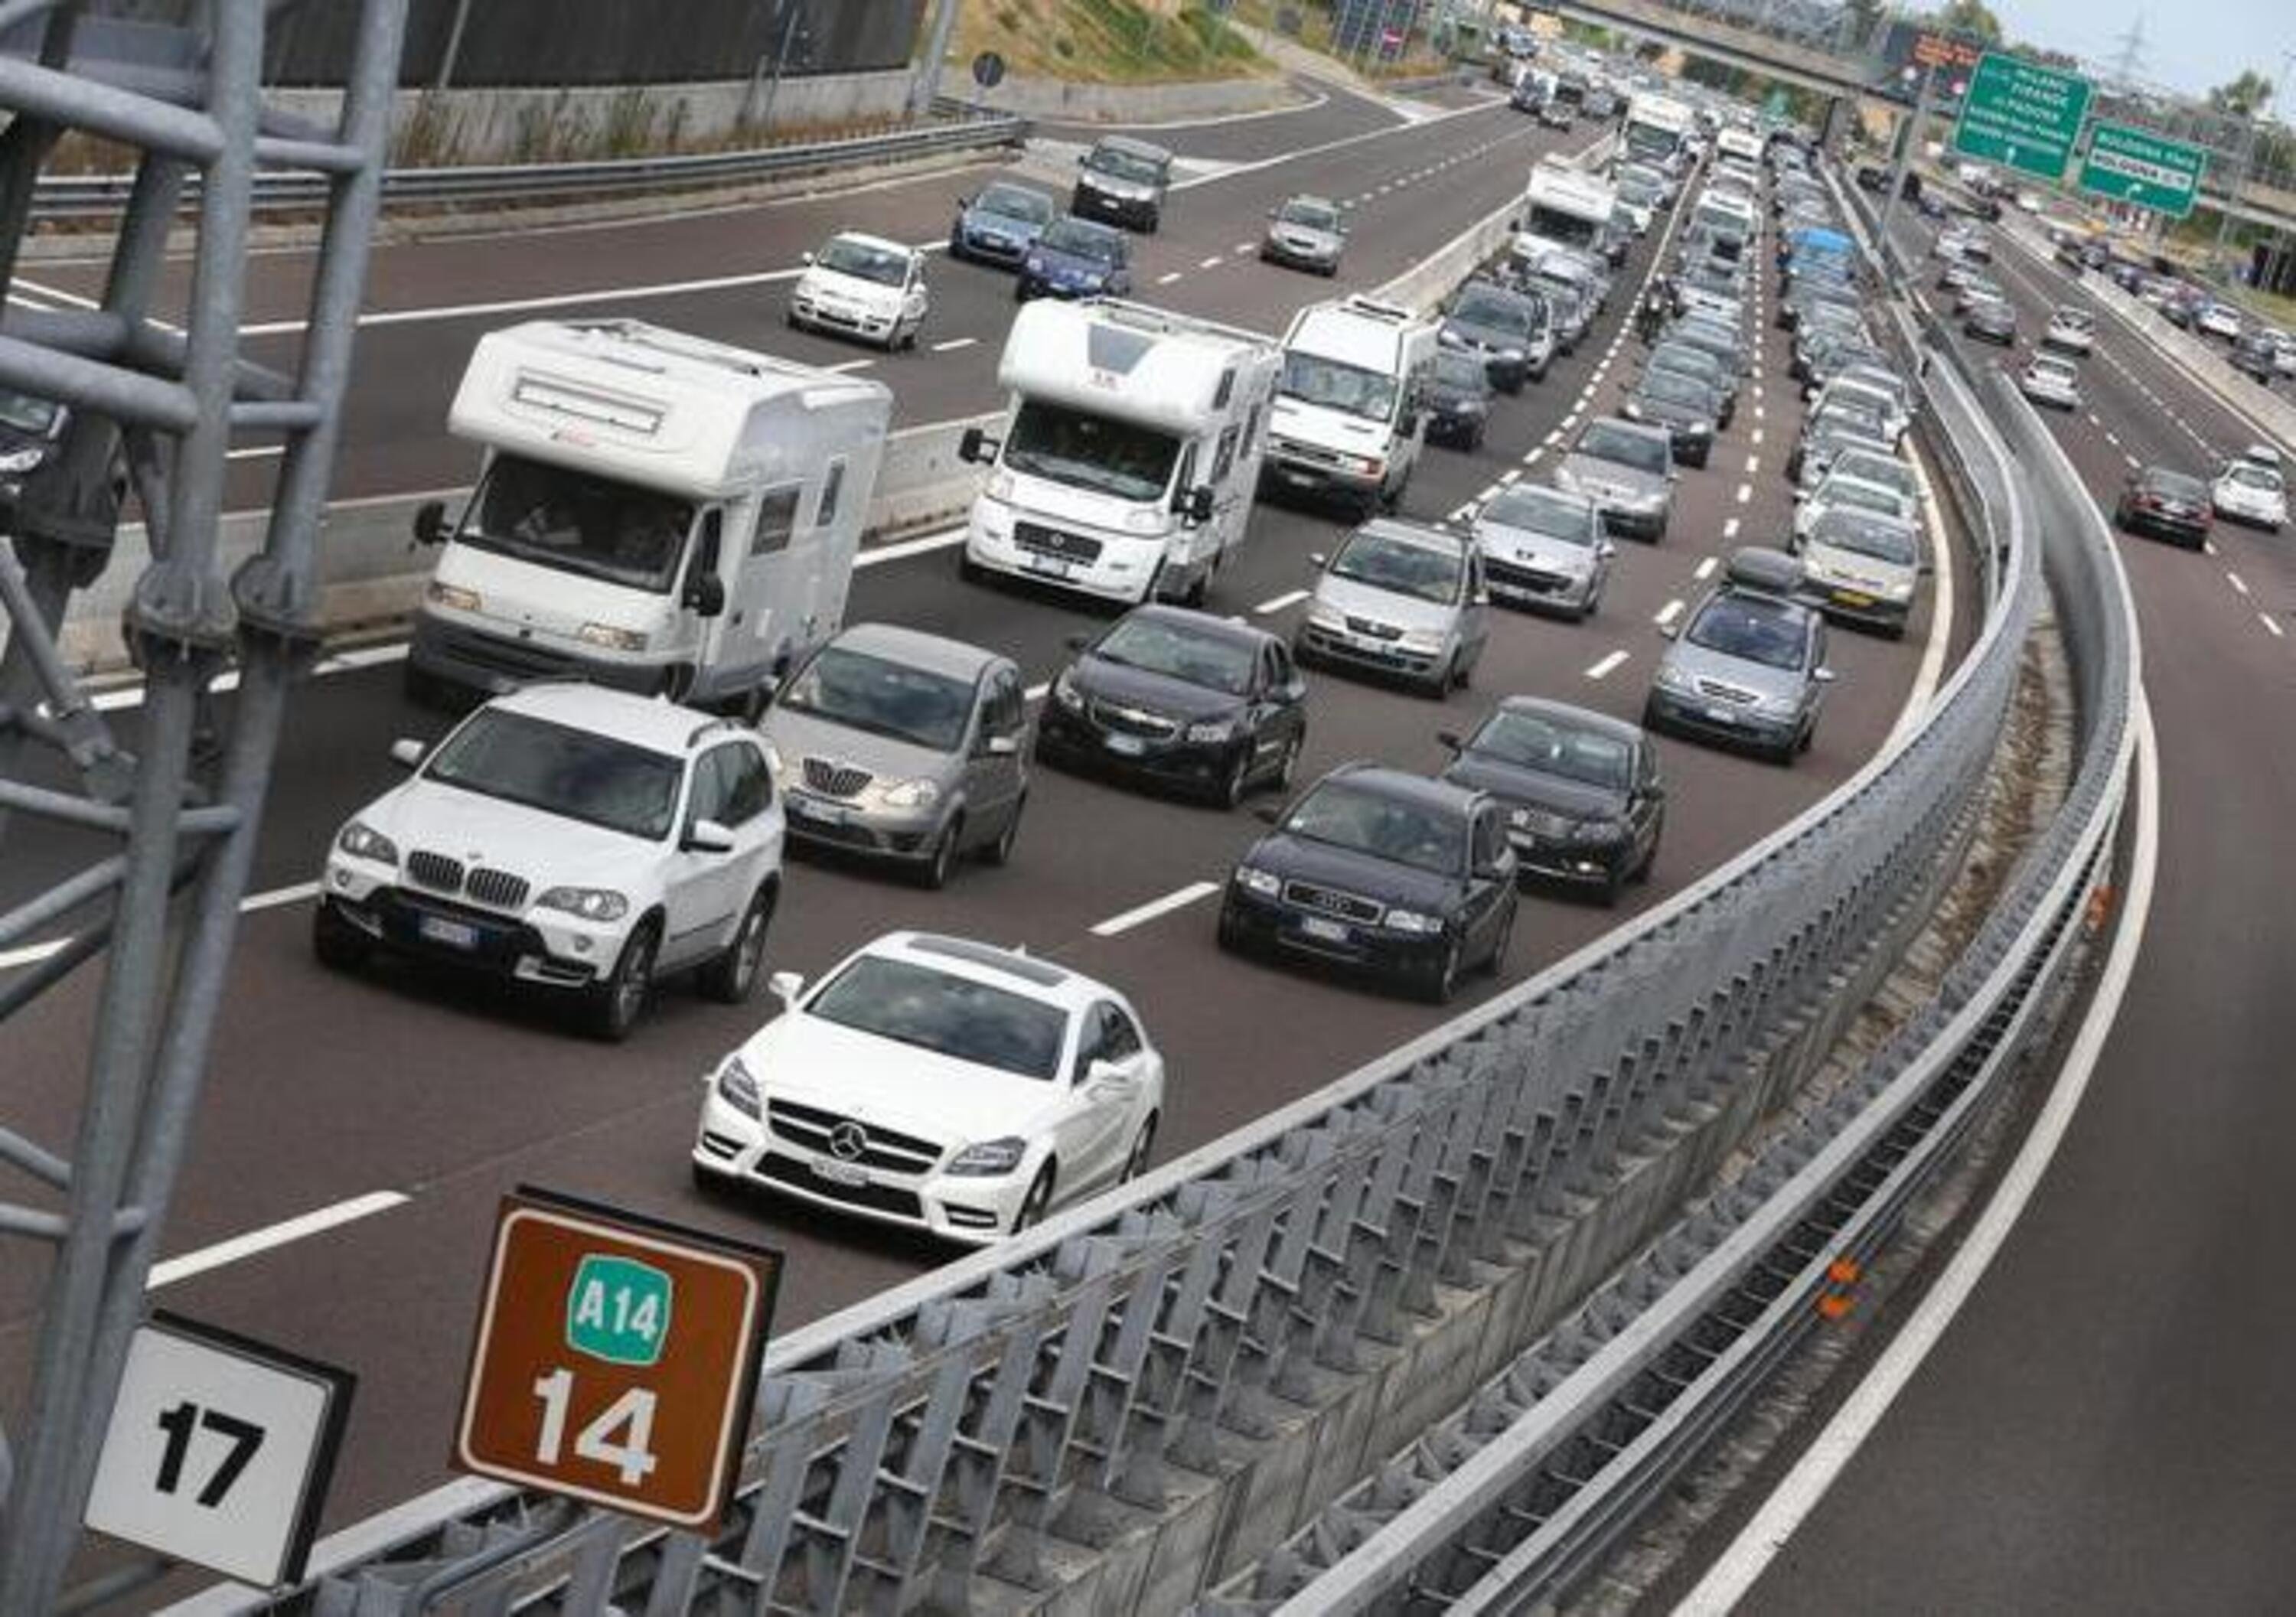 La guida autonoma arriva sulle autostrade italiane